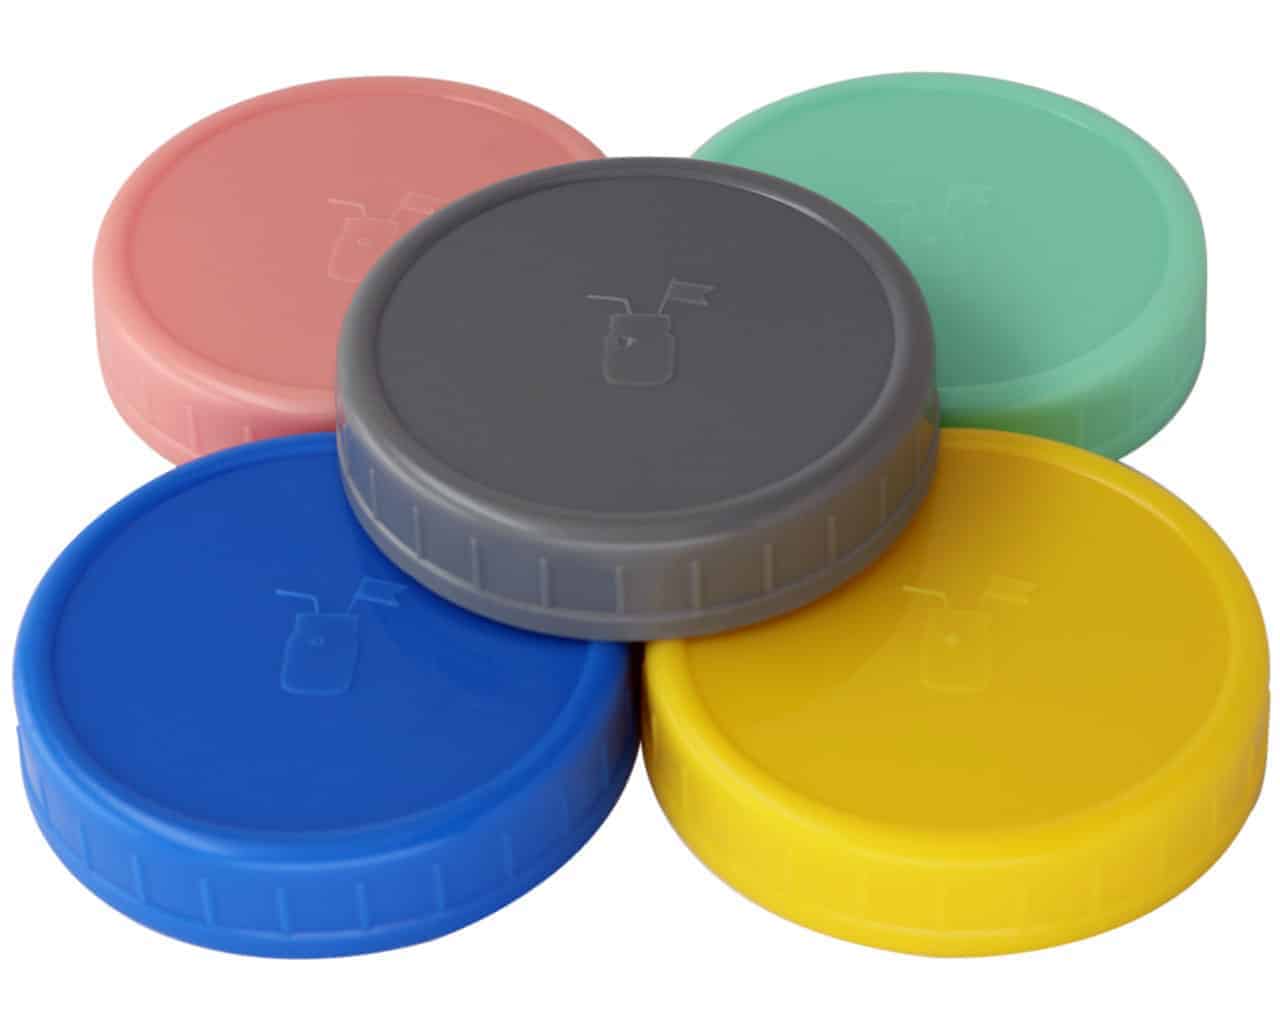 MJL Leak Proof Plastic Storage Lids for Mason Jars - Mason Jar Lifestyle